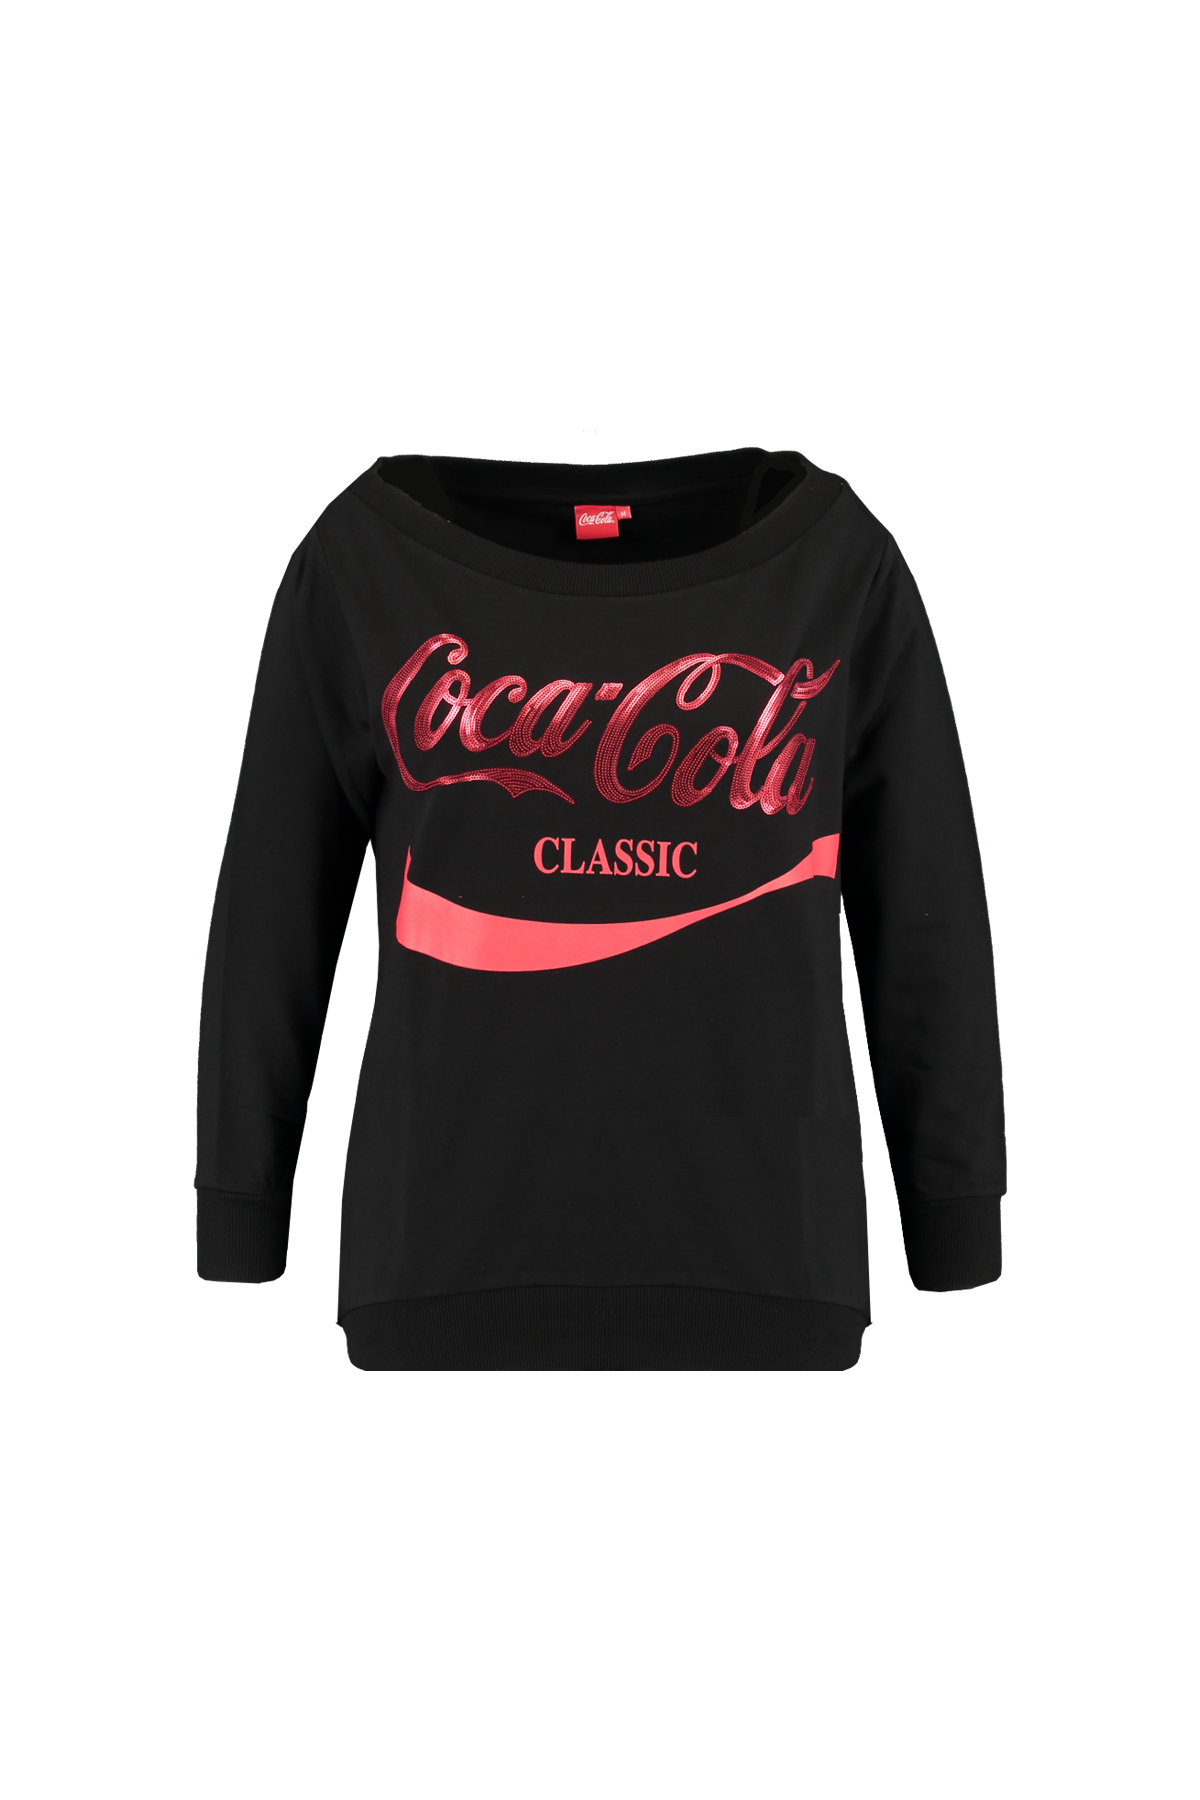 Damen Sweatshirt mit Coca-Cola-Print | Official MS Mode® online store